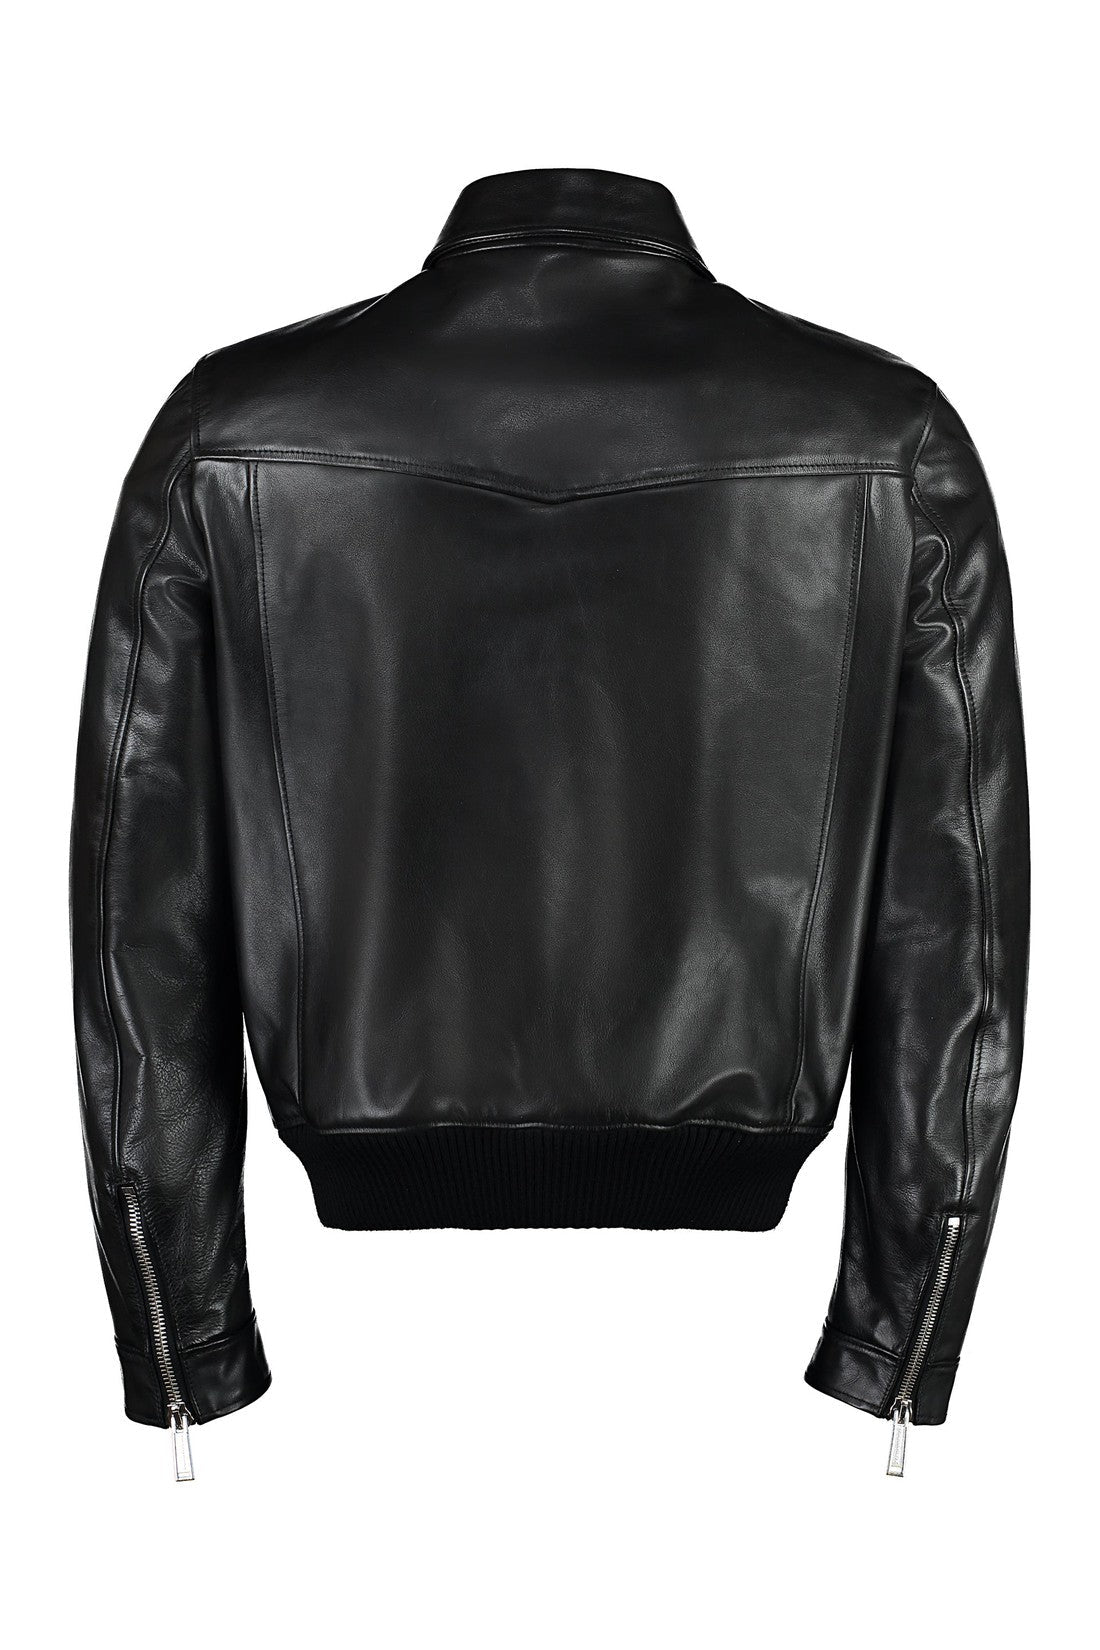 Dsquared2-OUTLET-SALE-Leather jacket-ARCHIVIST